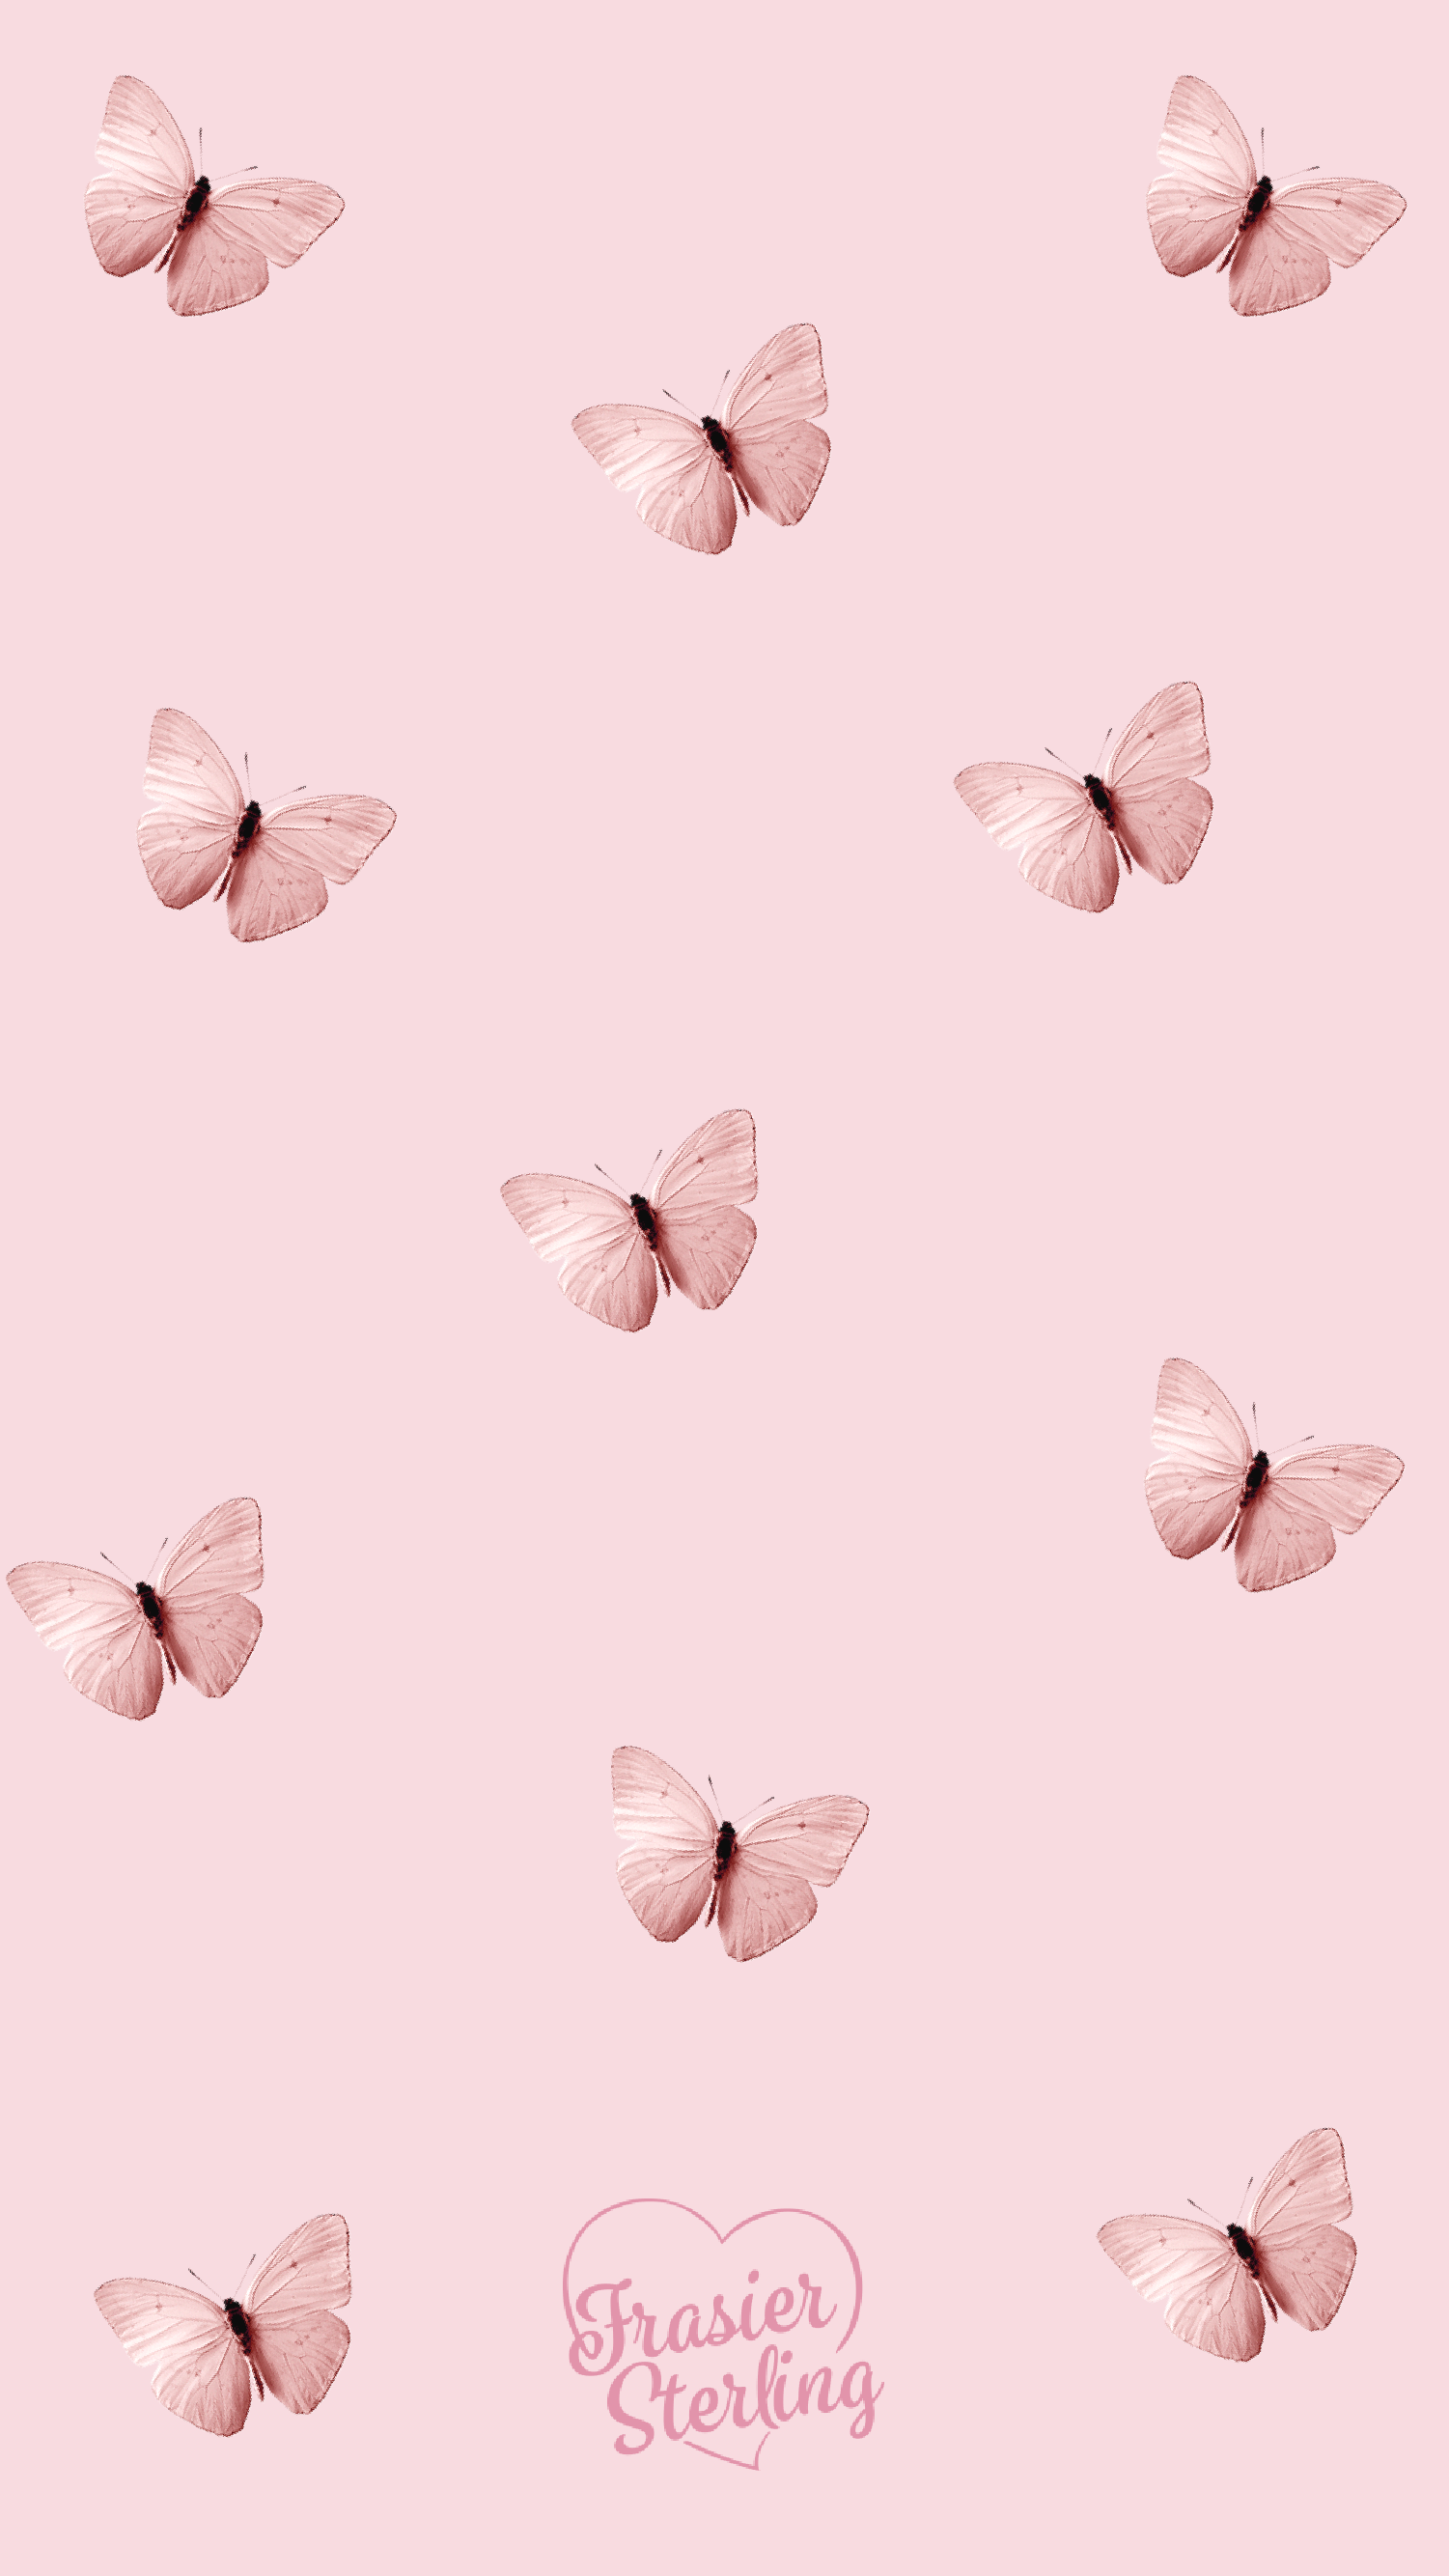 Pink Black Butterflies HD Pink Butterfly Wallpapers  HD Wallpapers  ID  60961